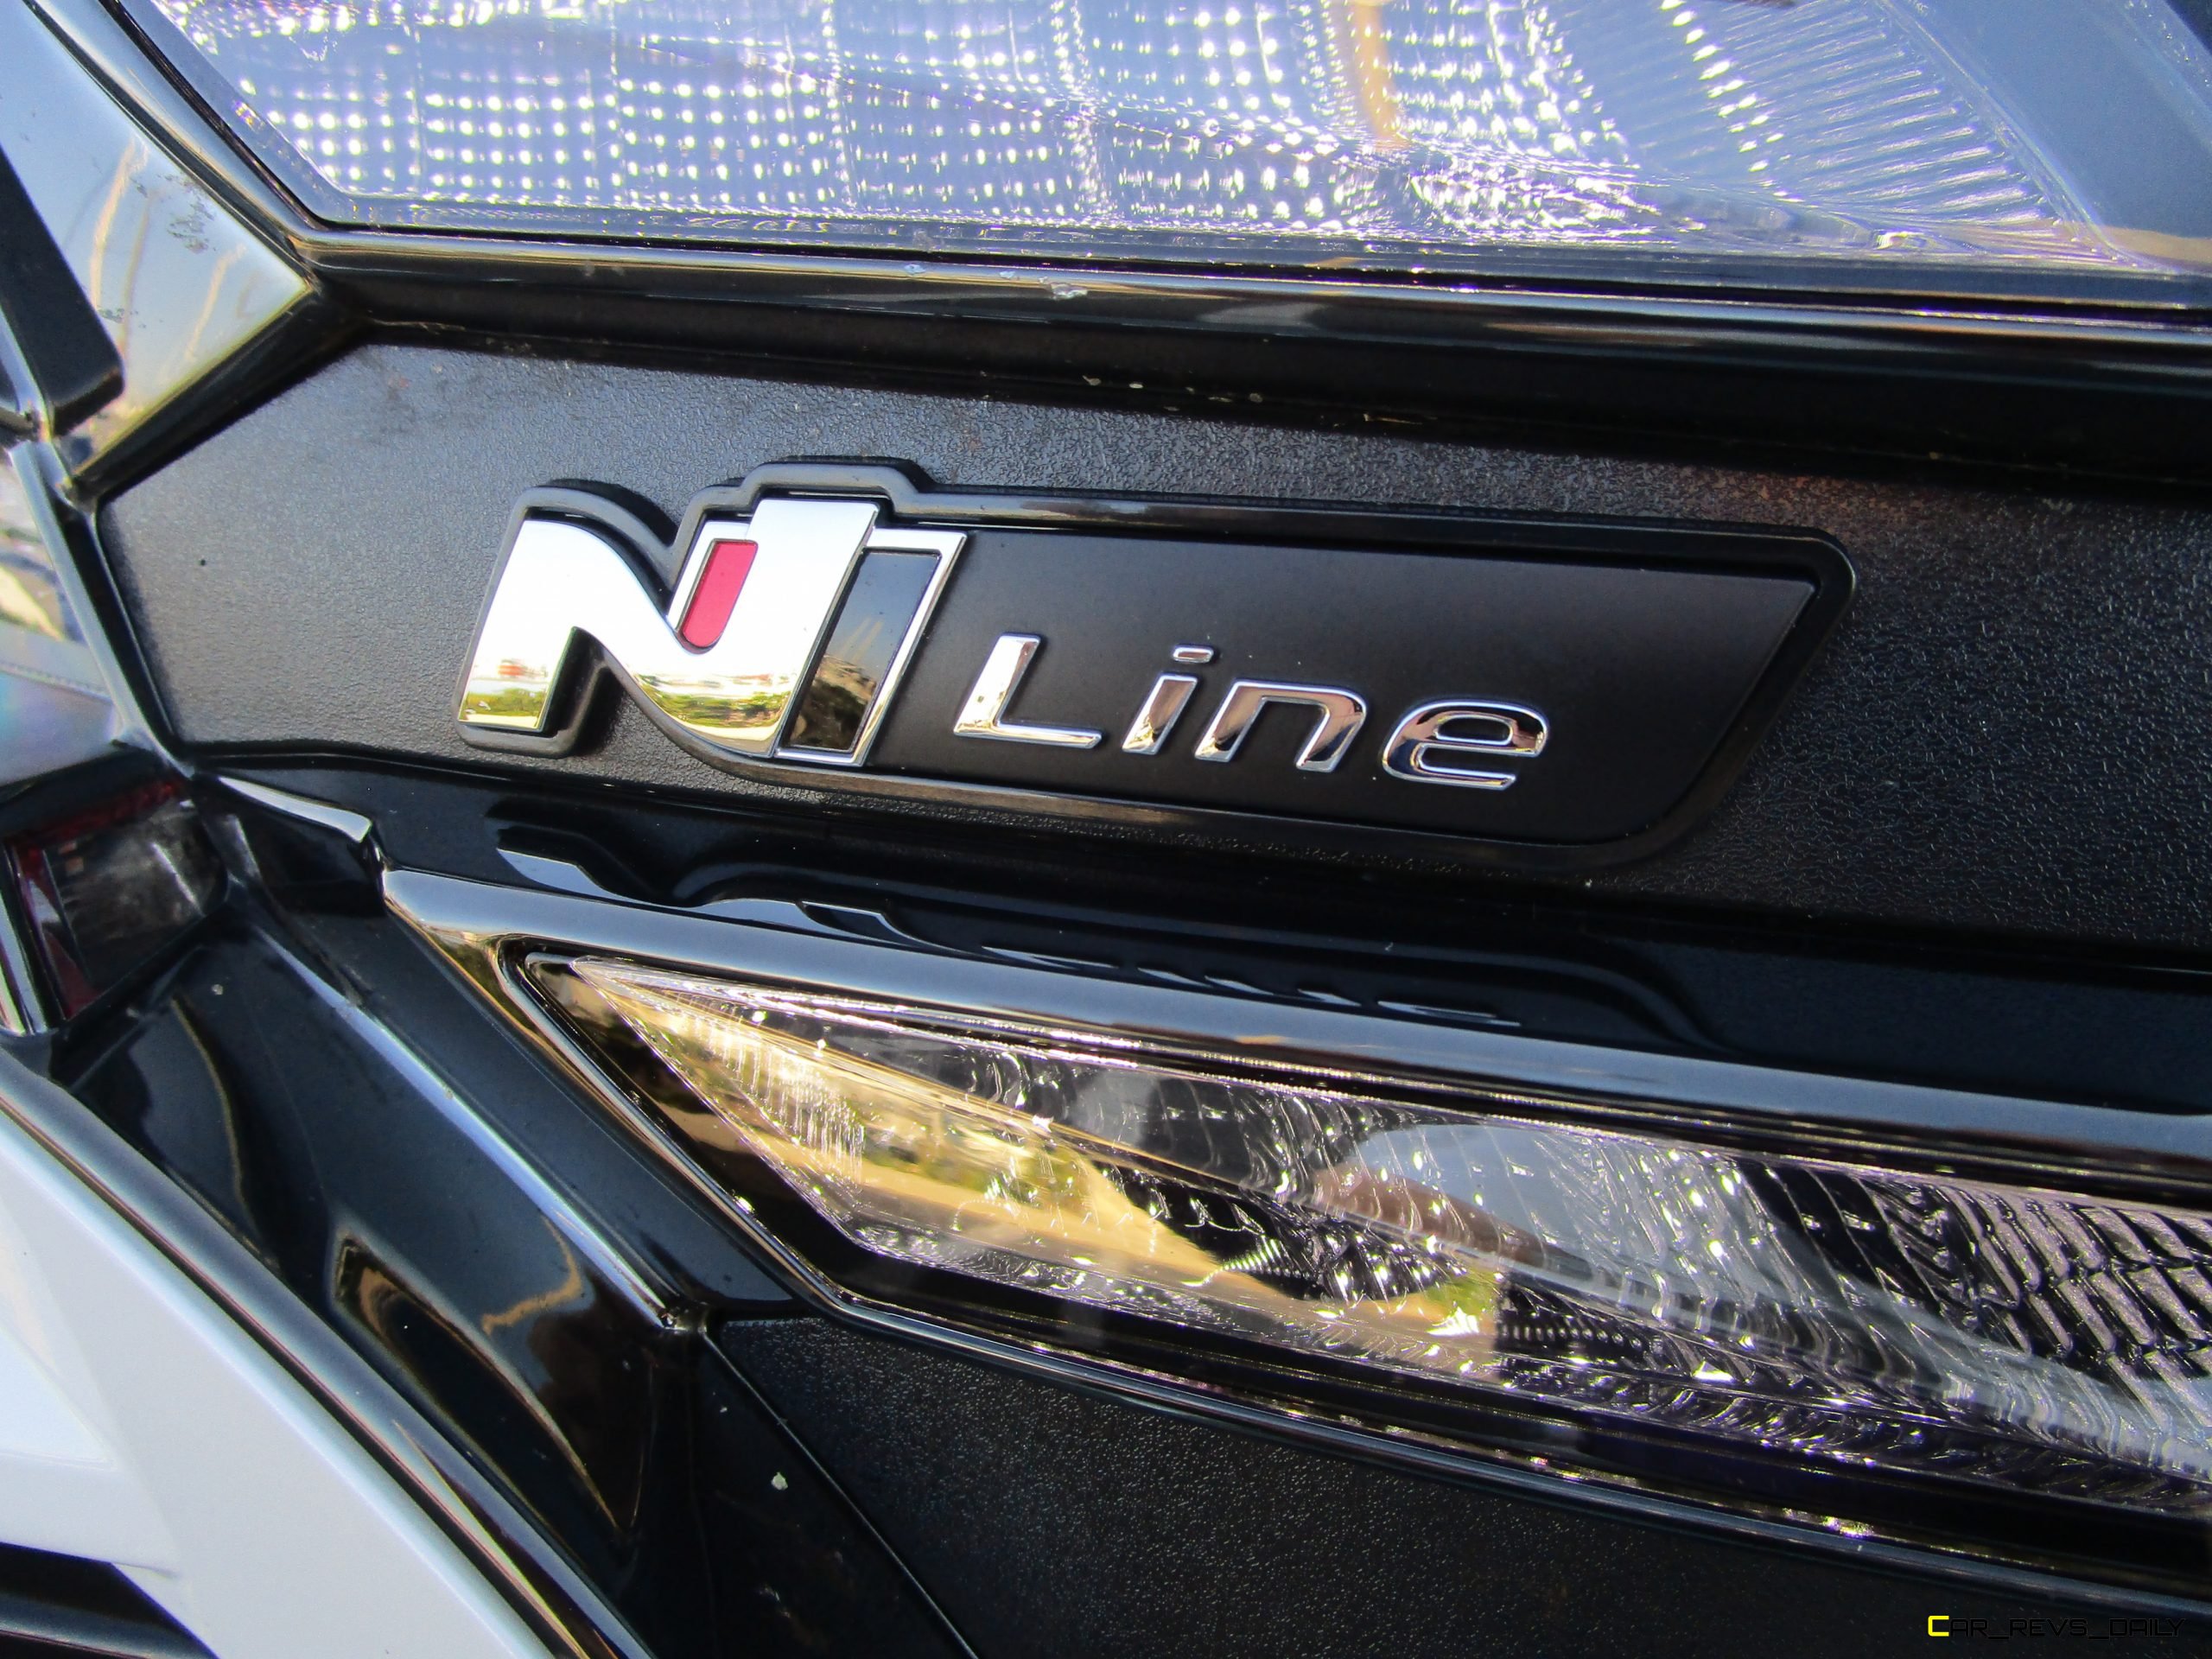 2022 Hyundai Tucson N Line H-Trac review by Ben Lewis